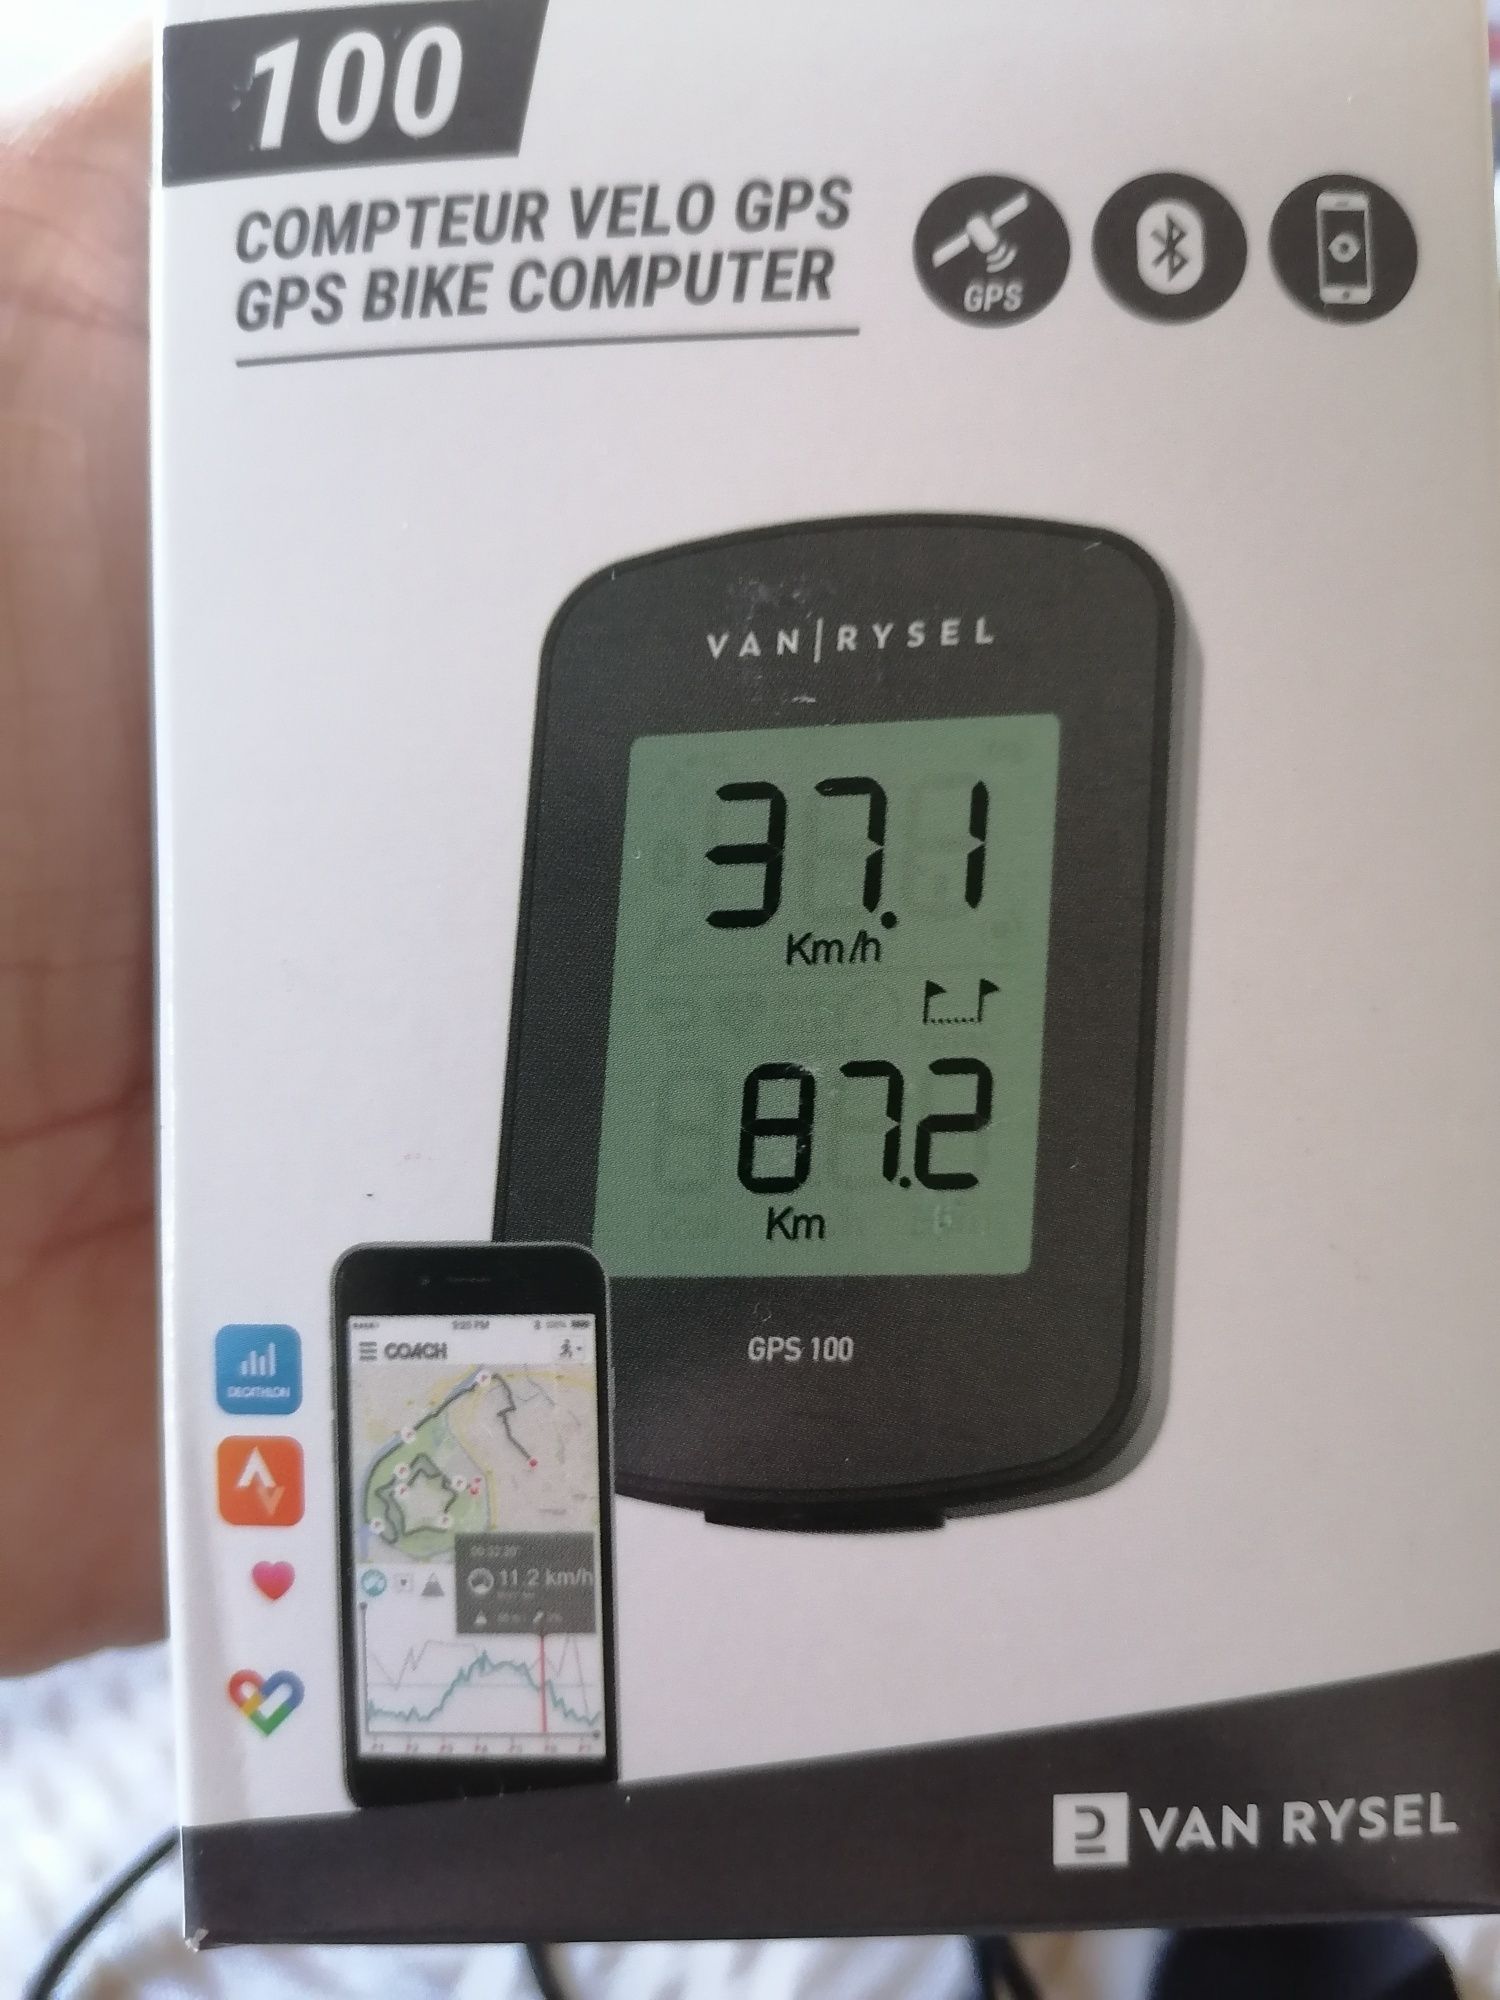 Ciclocomputador com GPS 100 Van rysel